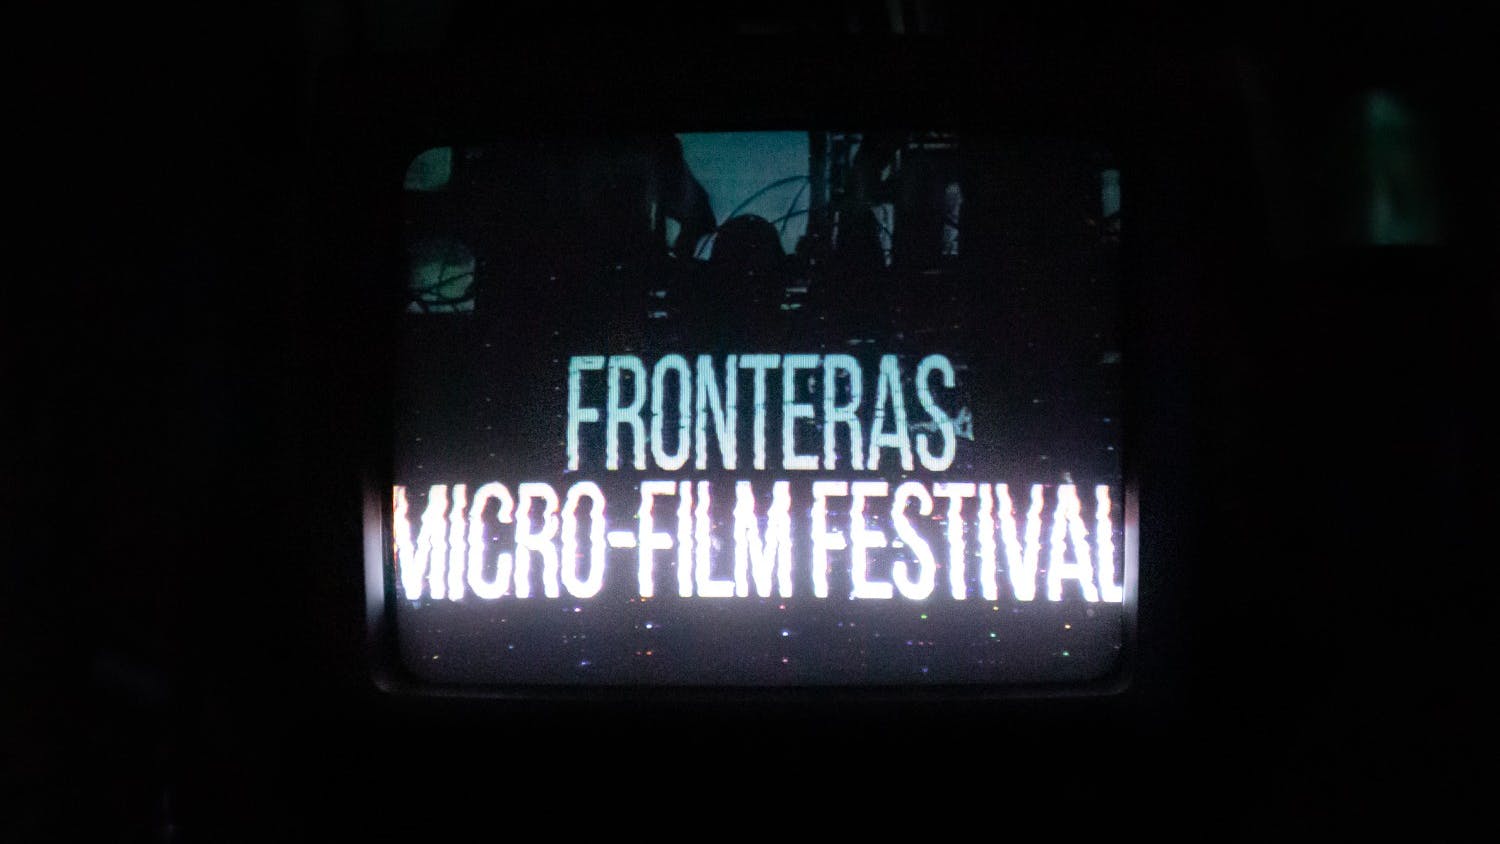 Fronteras Micro-Film Festival: an interactive artistic experience on border politics